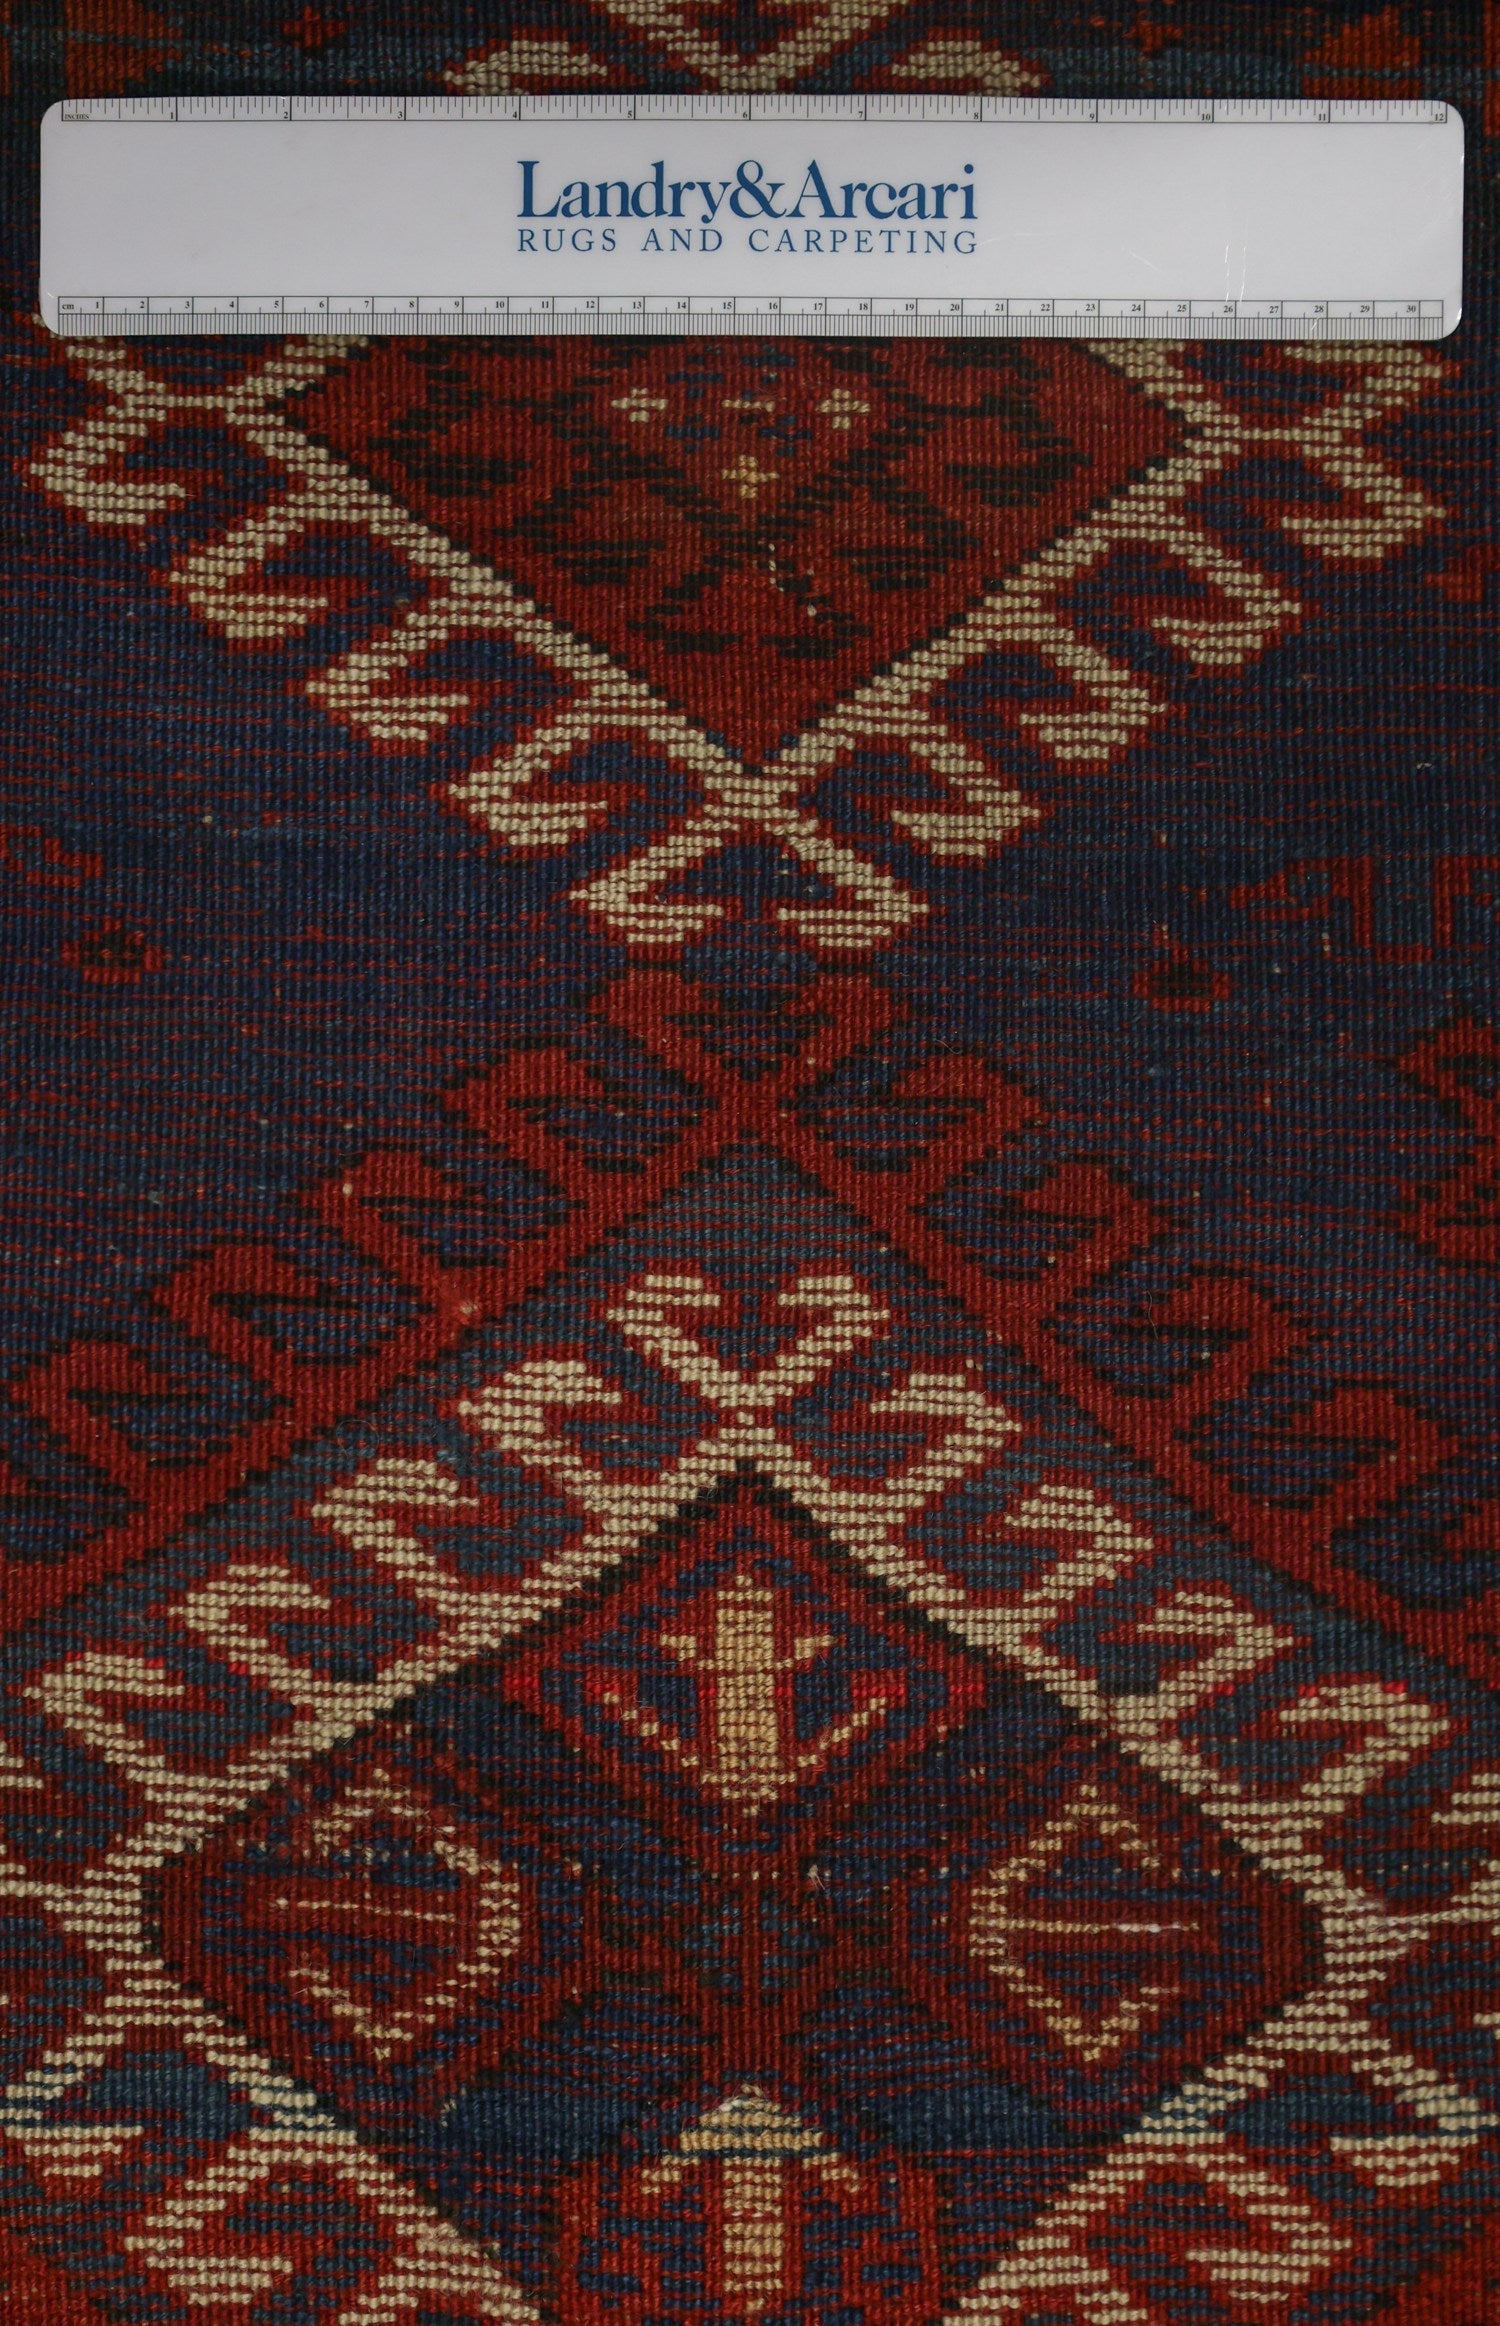 Antique Kazak Handwoven Tribal Rug, J70666